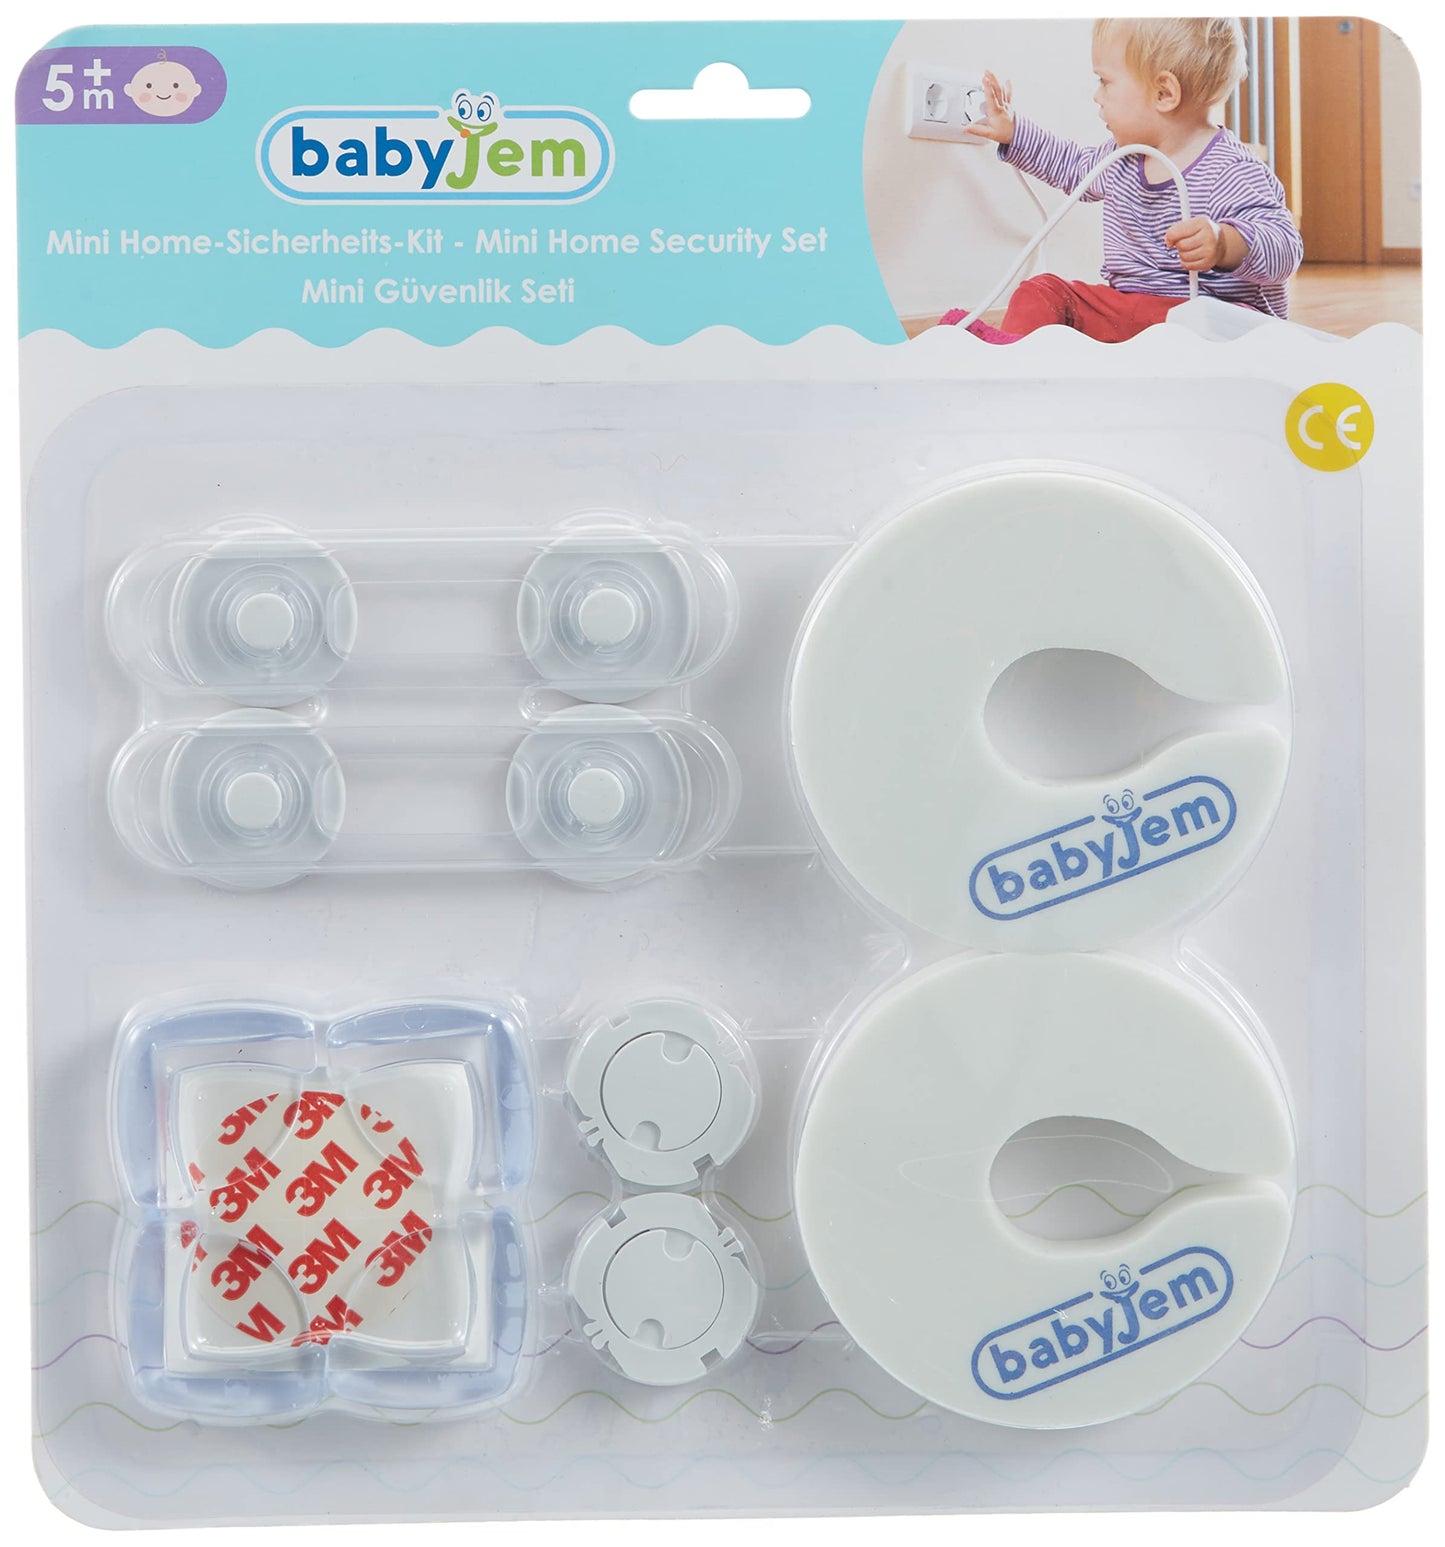 Babyjem - Mini Home Security Set